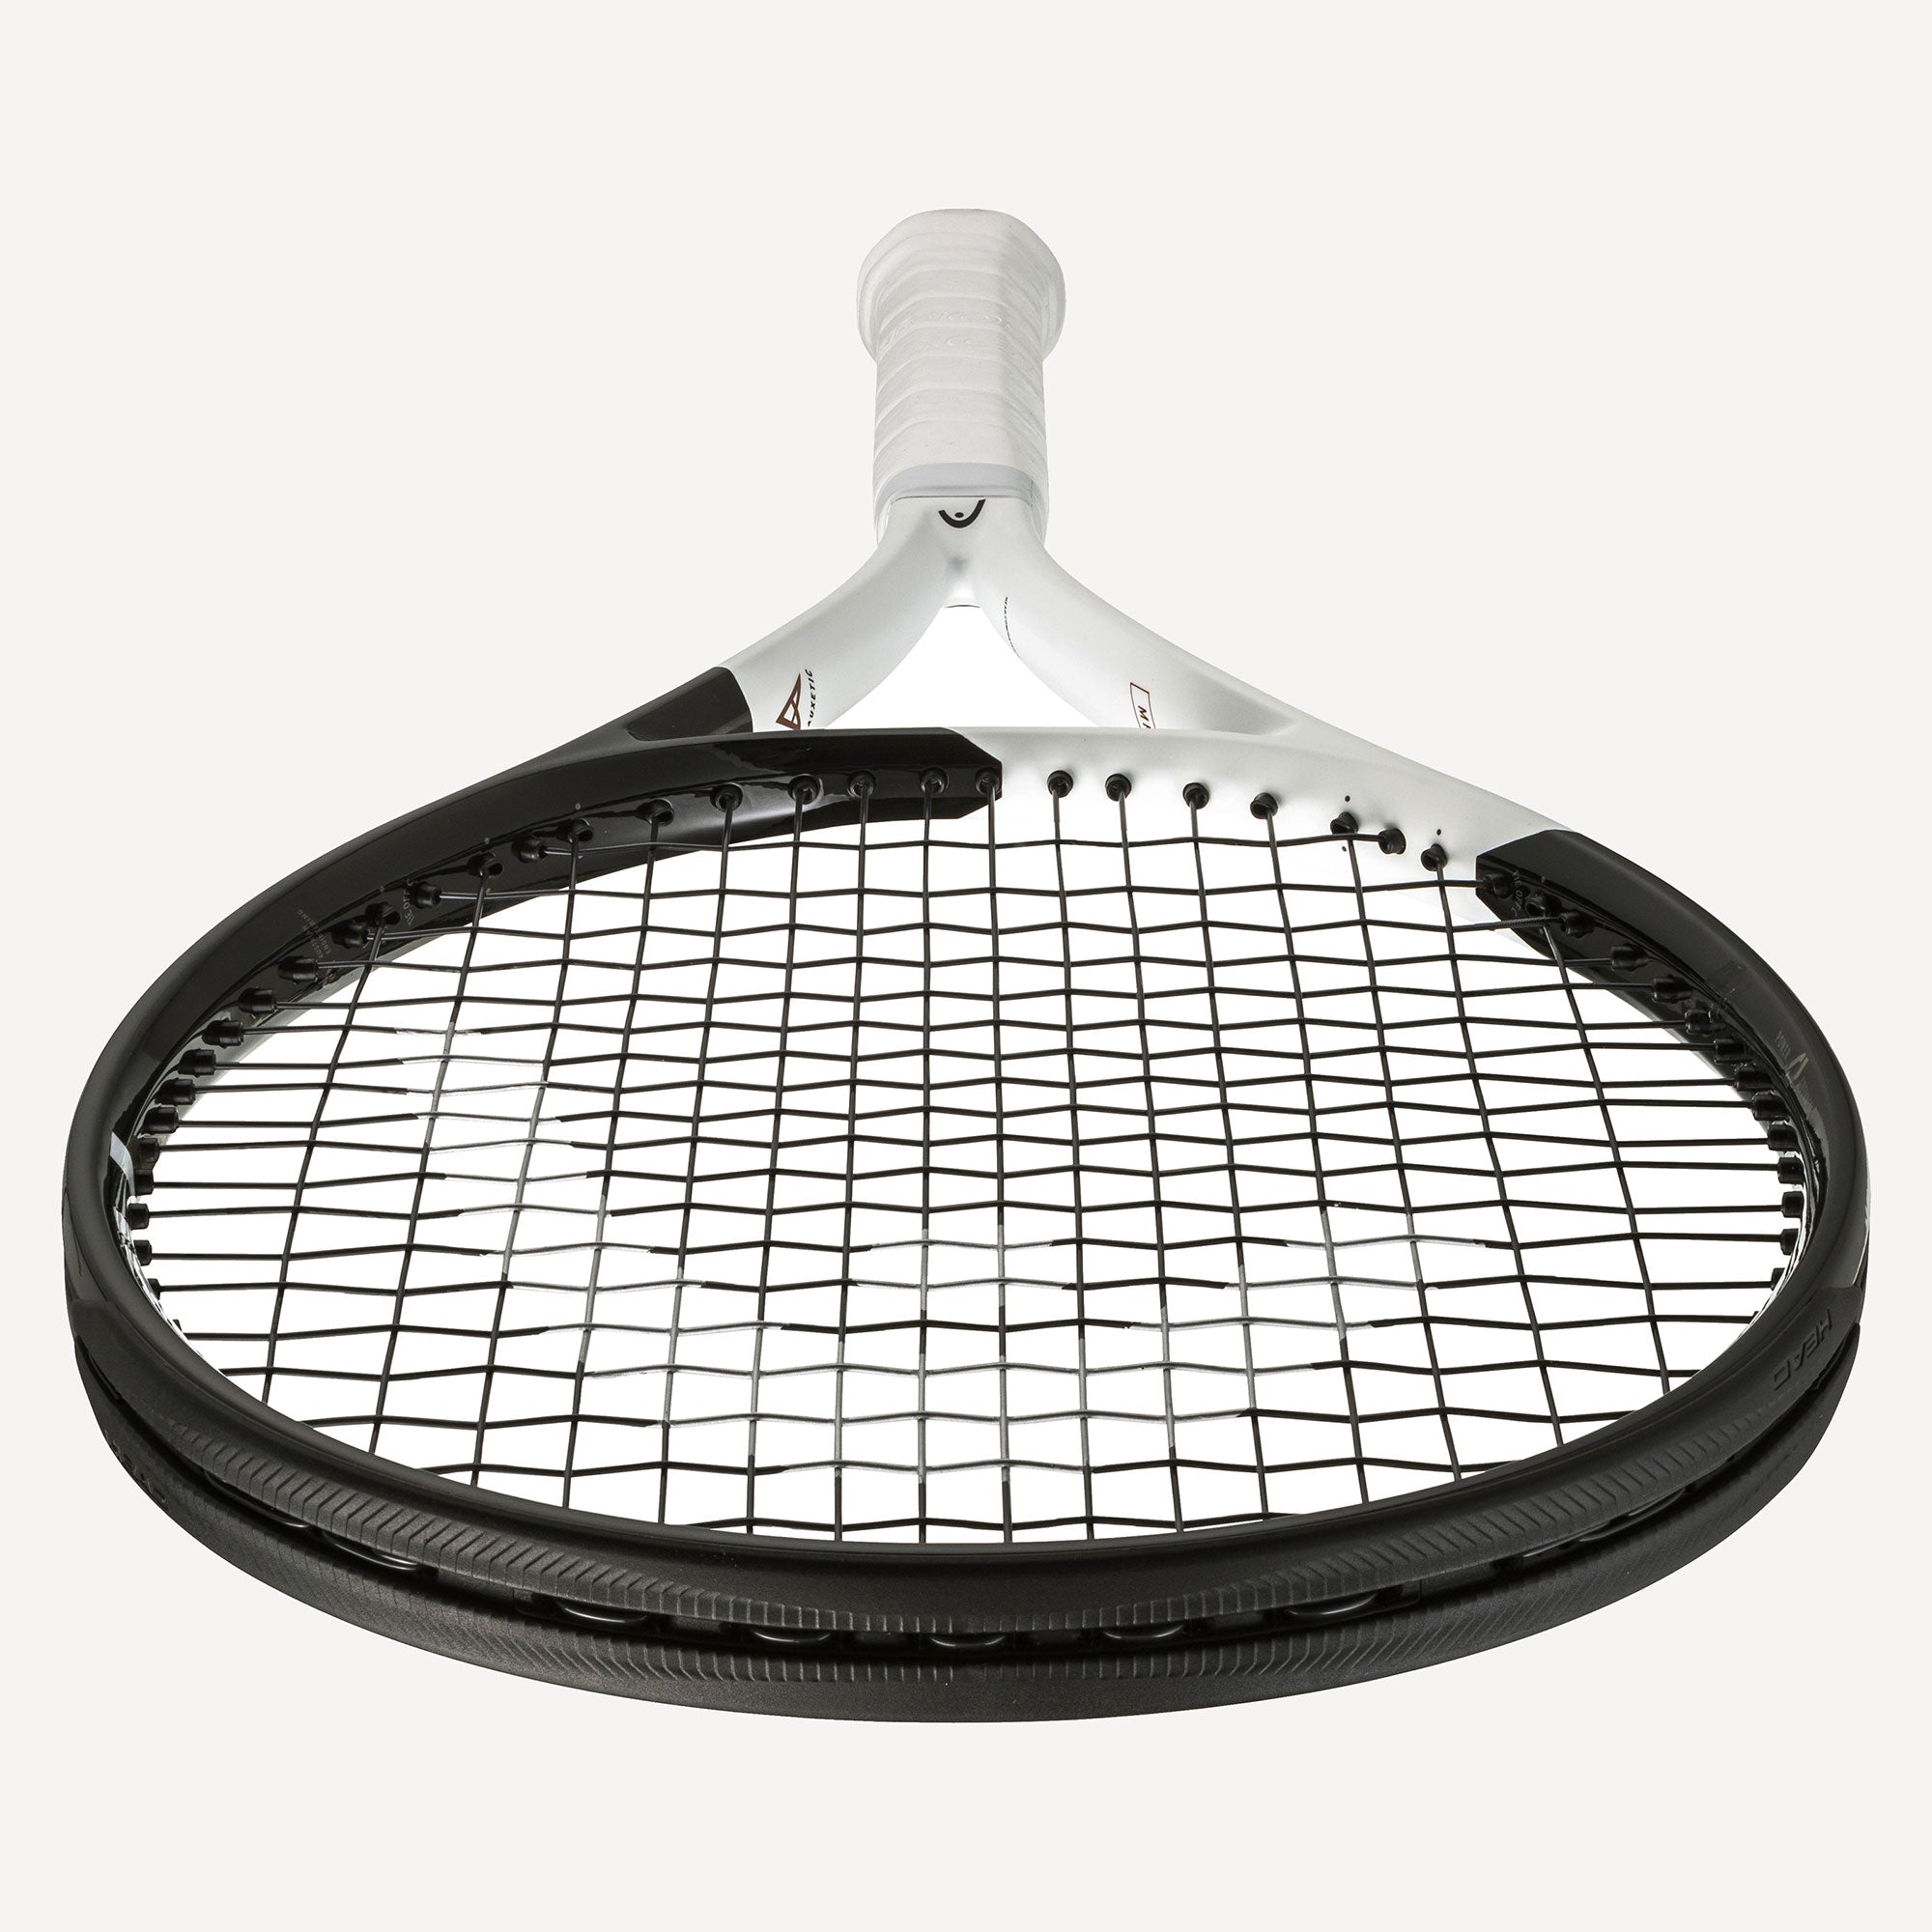 HEAD Speed MP Tennis Racket  (6)